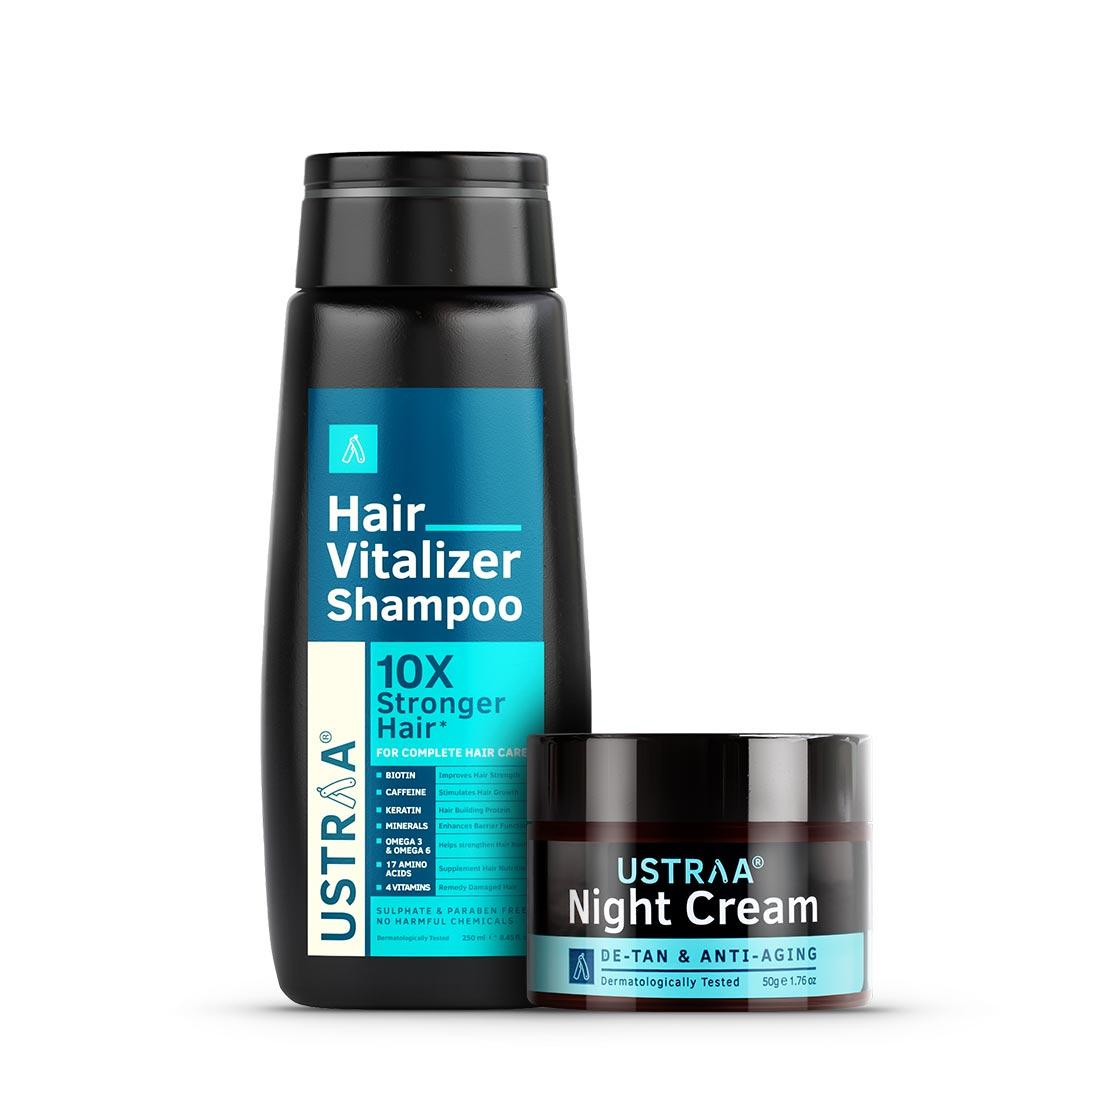 Hair Vitalizer Shampoo & Night Cream